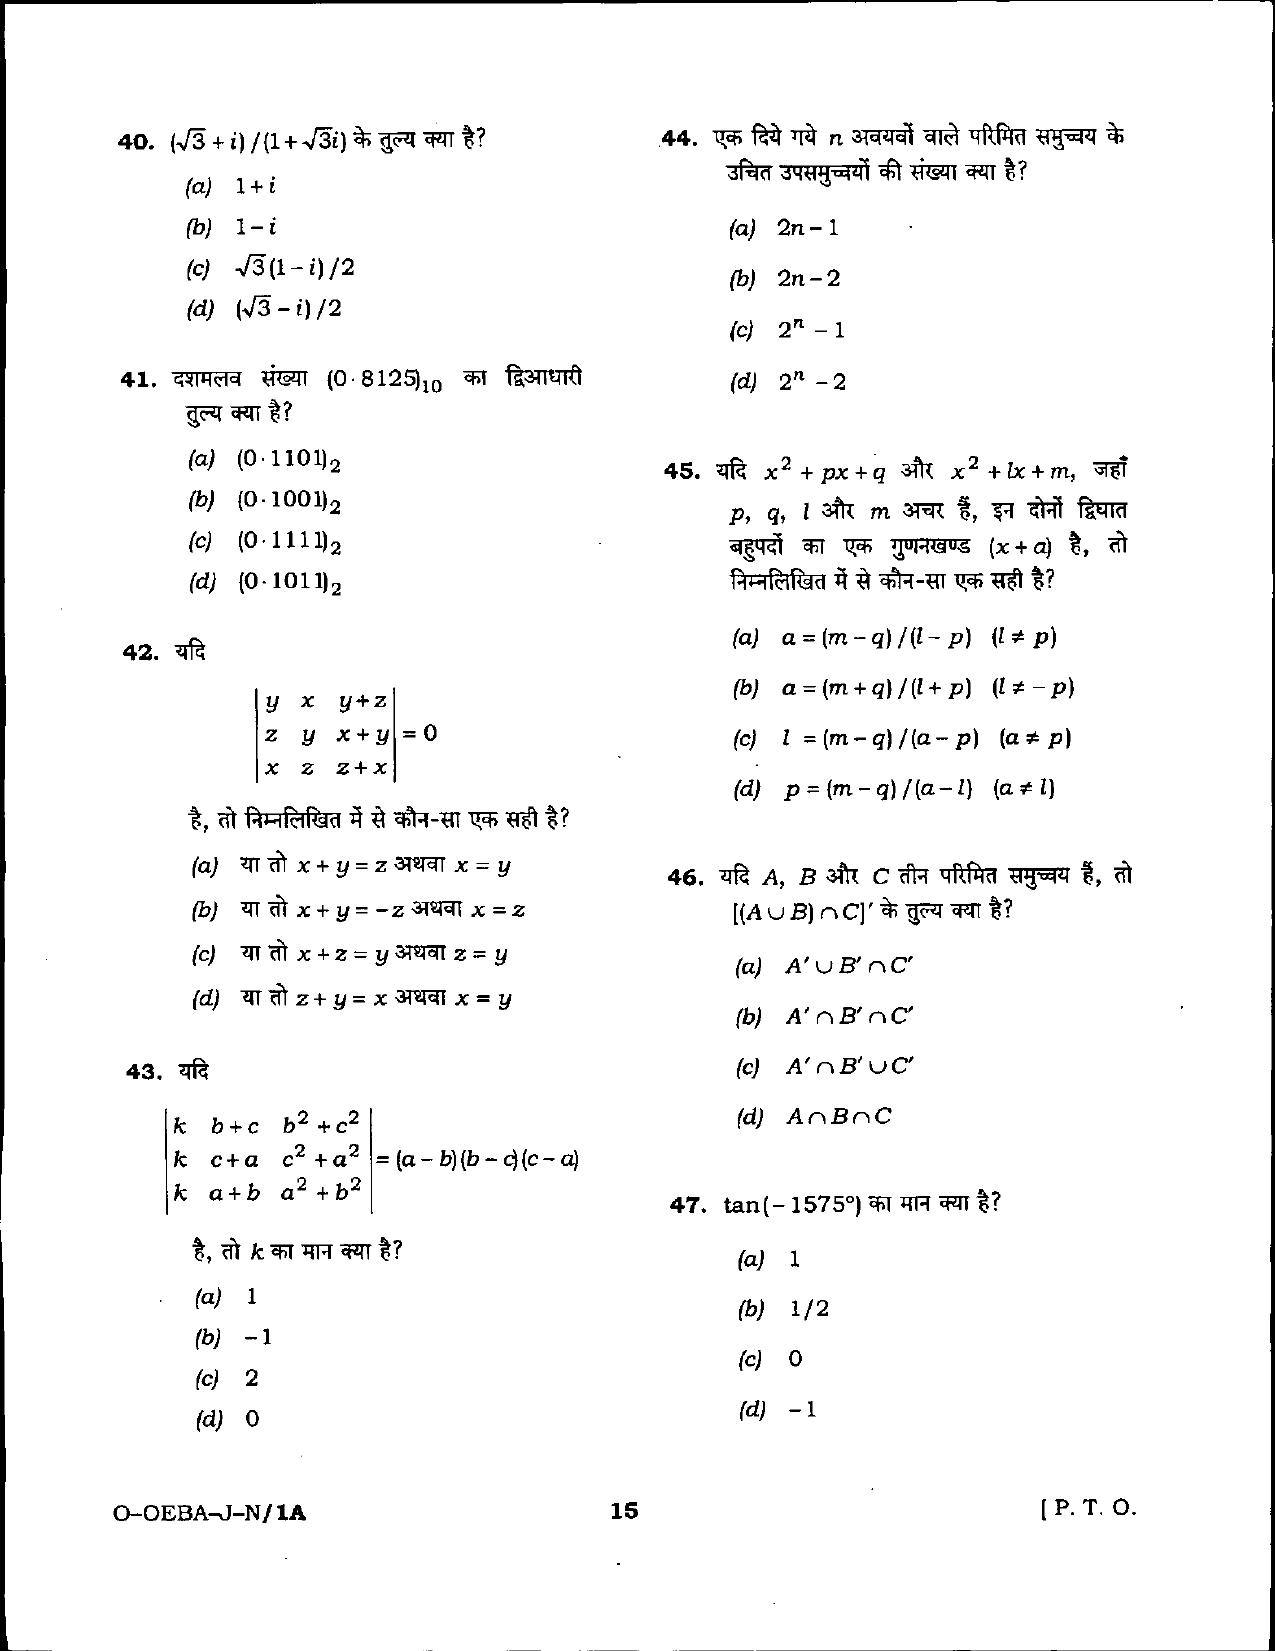 Odisha Junior Clerk Question Paper - General Mathematics - Page 15